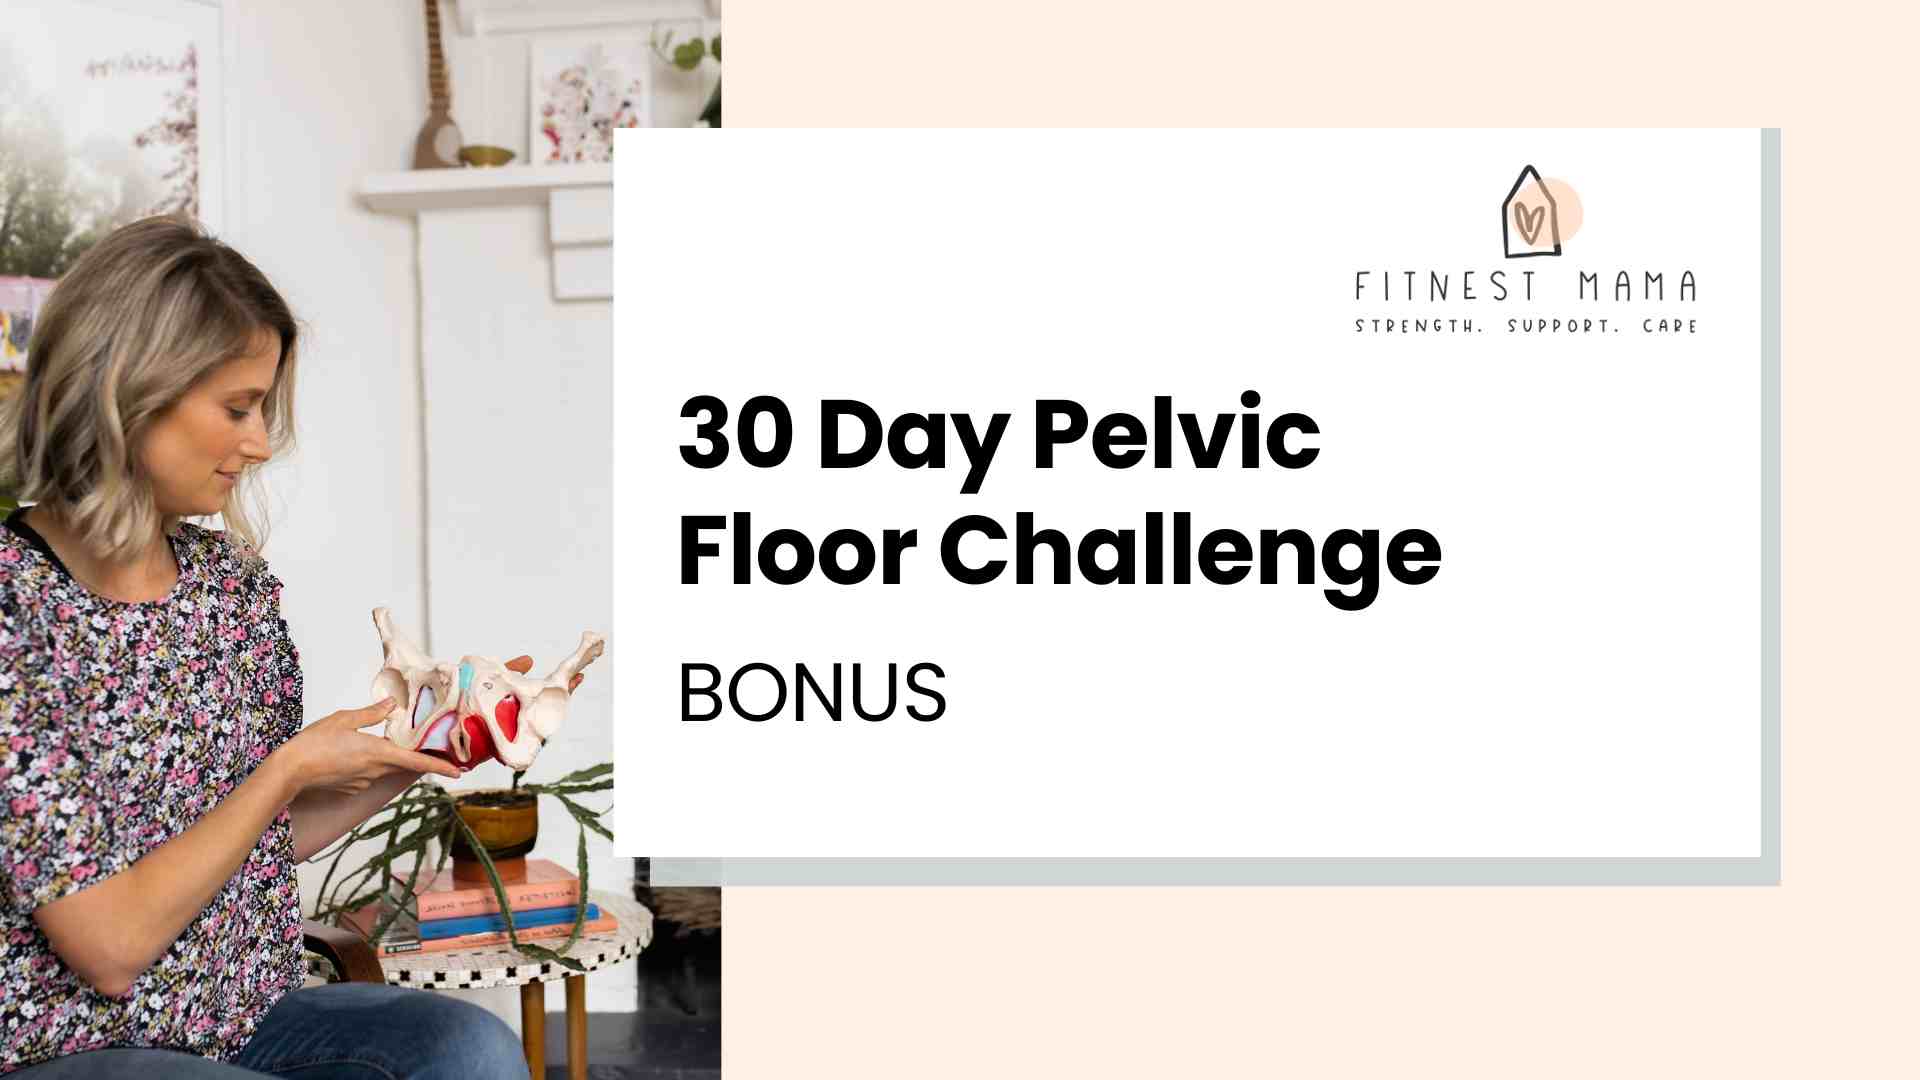 Image describing the FitNest Mama 30 Day Pelvic floor challenge